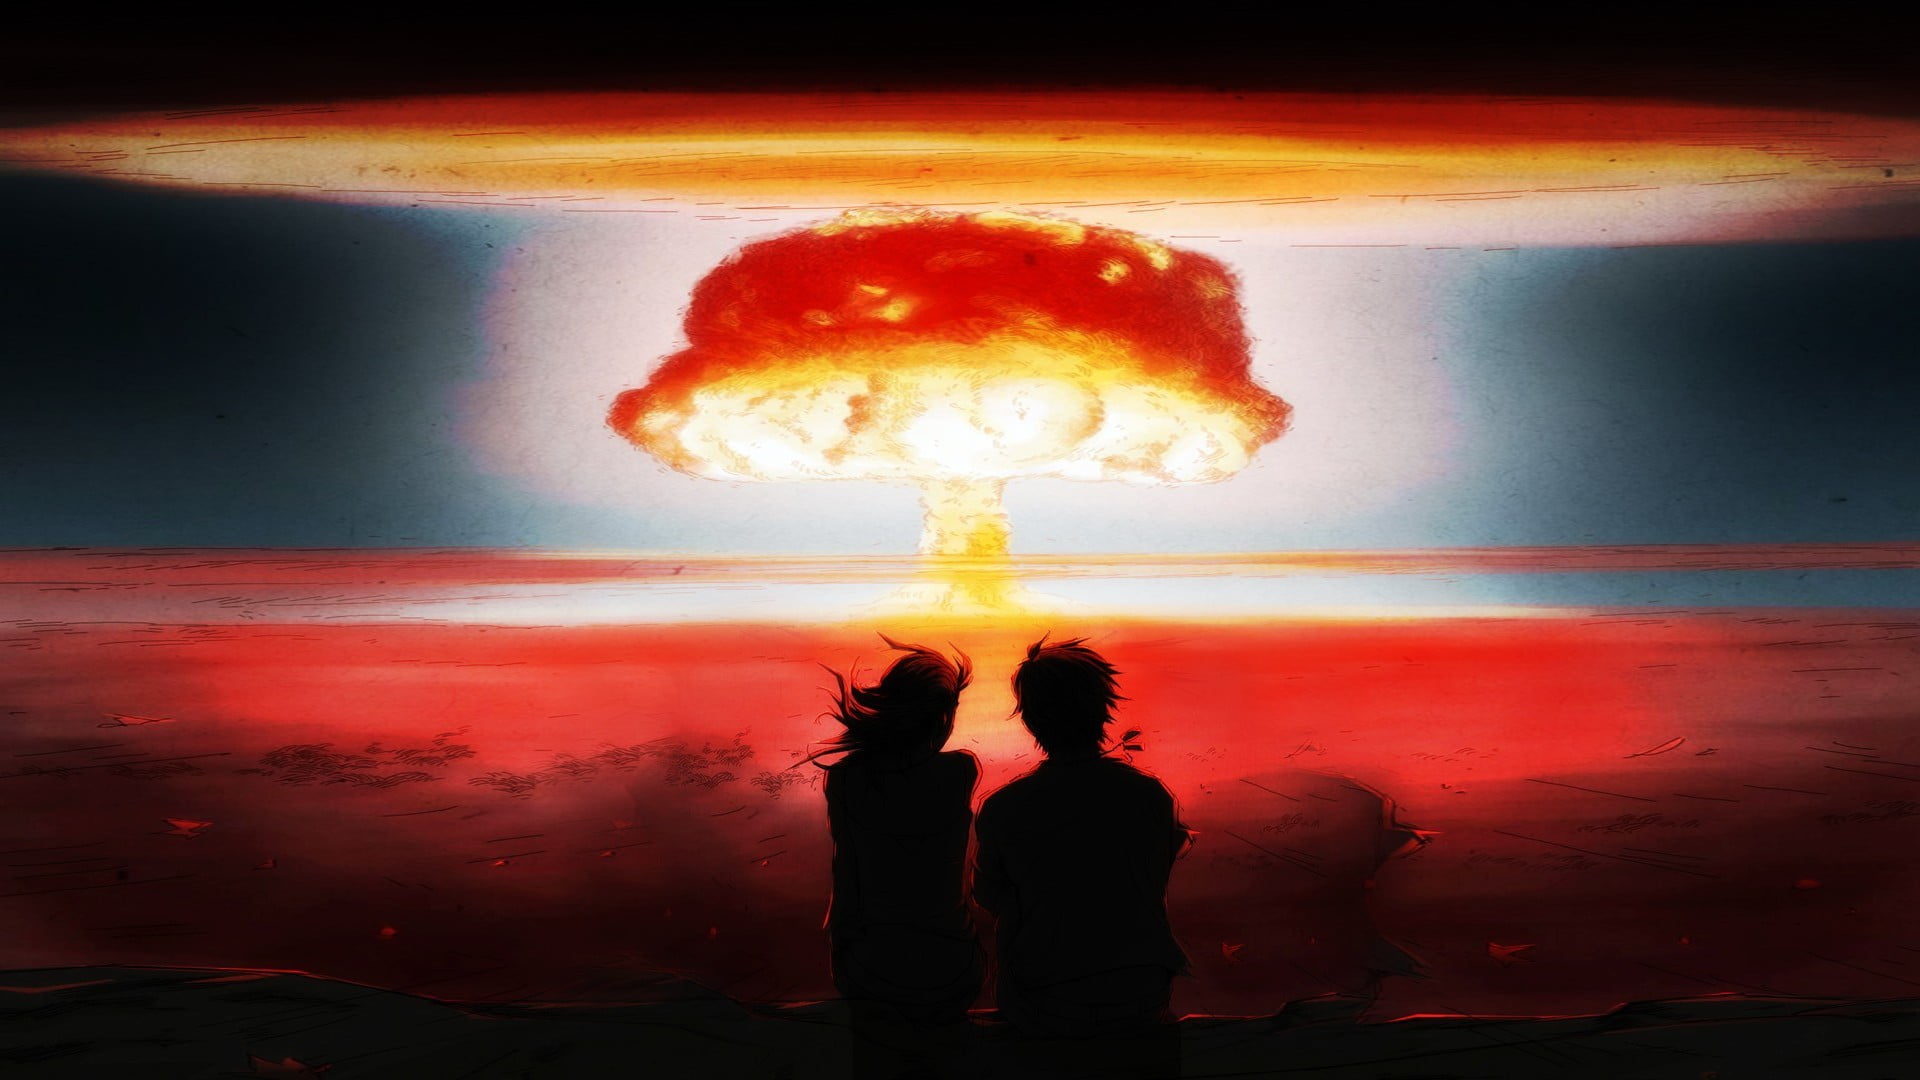 mushroom cloud illustration, nuclear, atomic bomb, apocalyptic